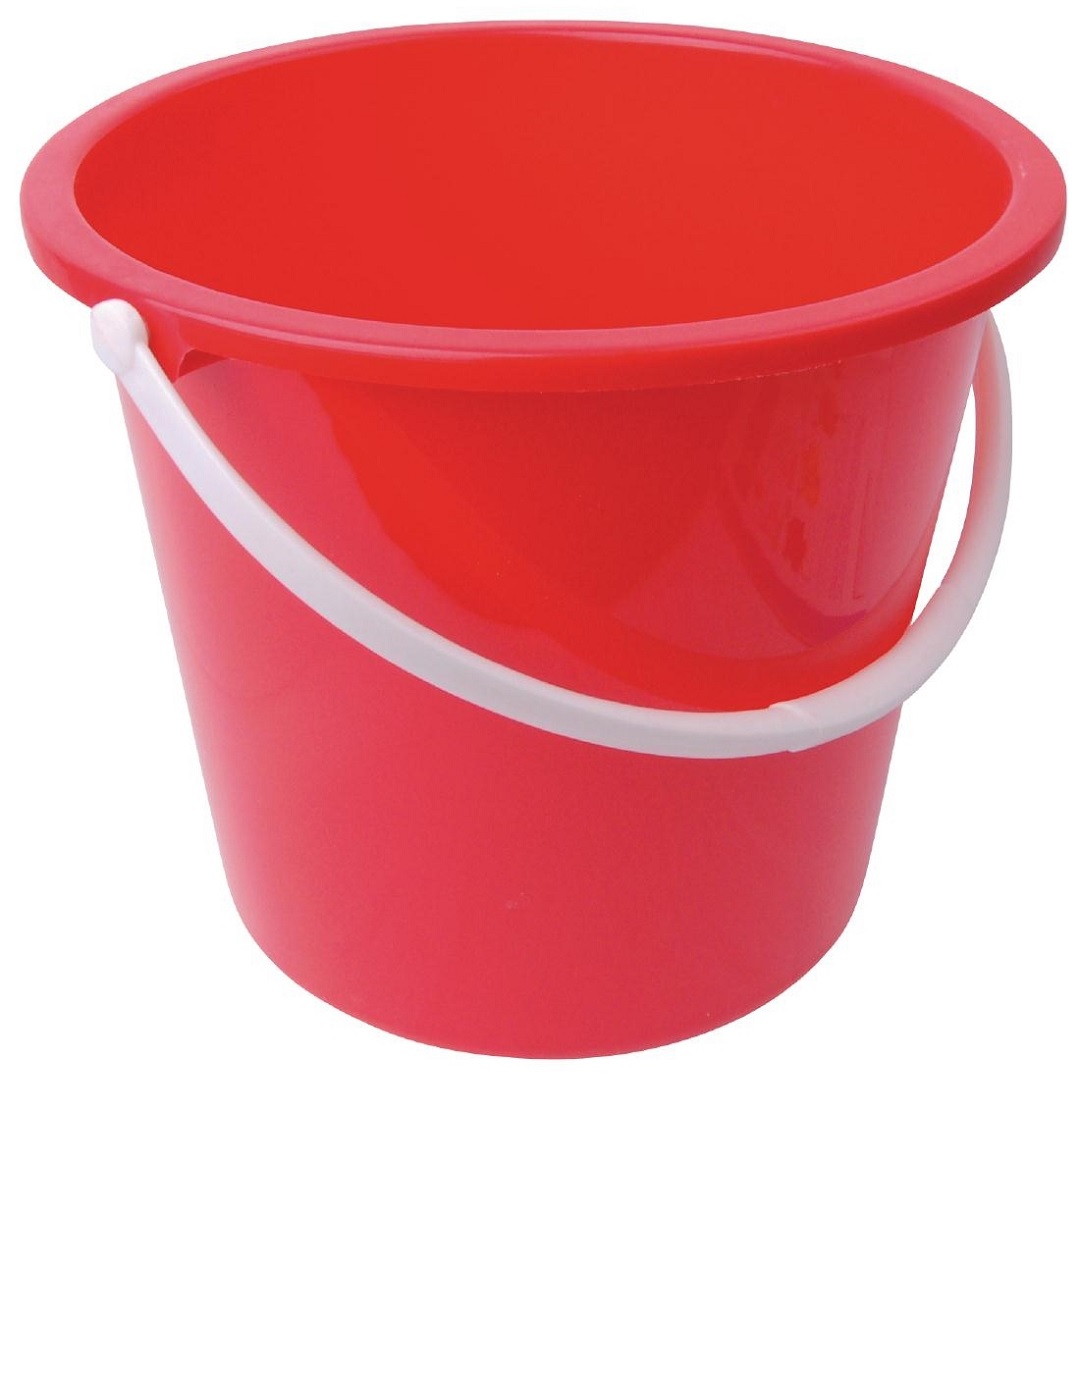 Jantex Colour Coded Plastic Buckets